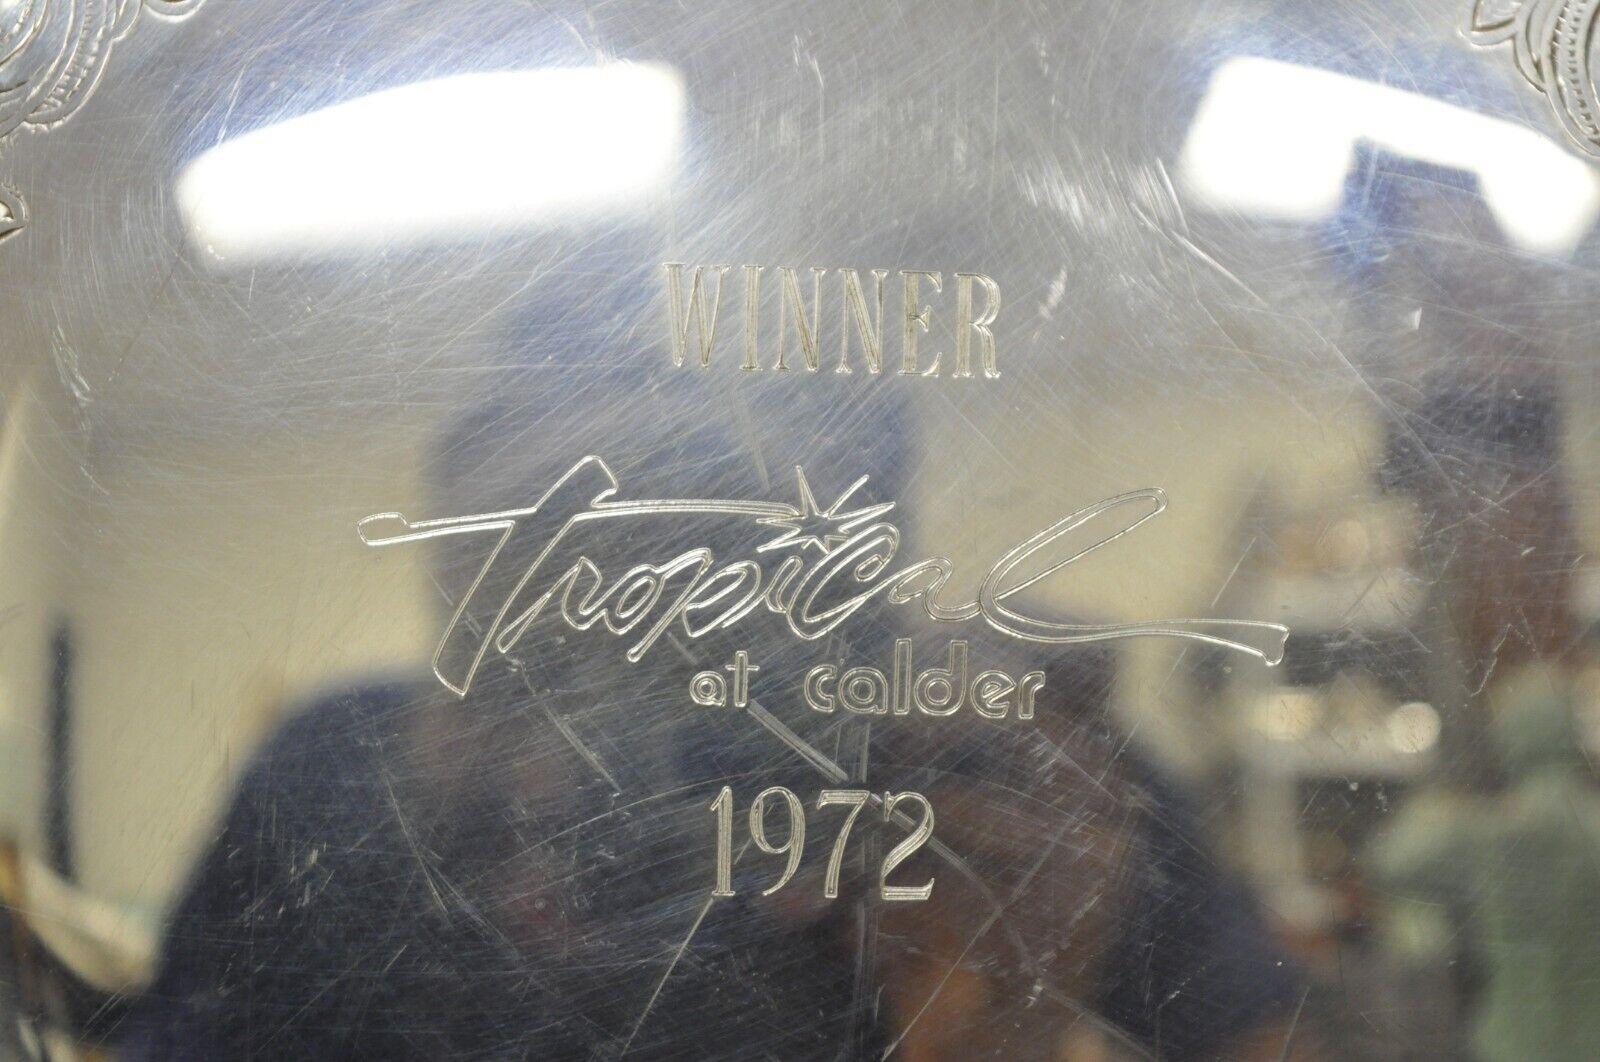 Victorian Vintage Sheridan 18” Round Award Platter Tray “Winner Tropical at Calder 1972” For Sale